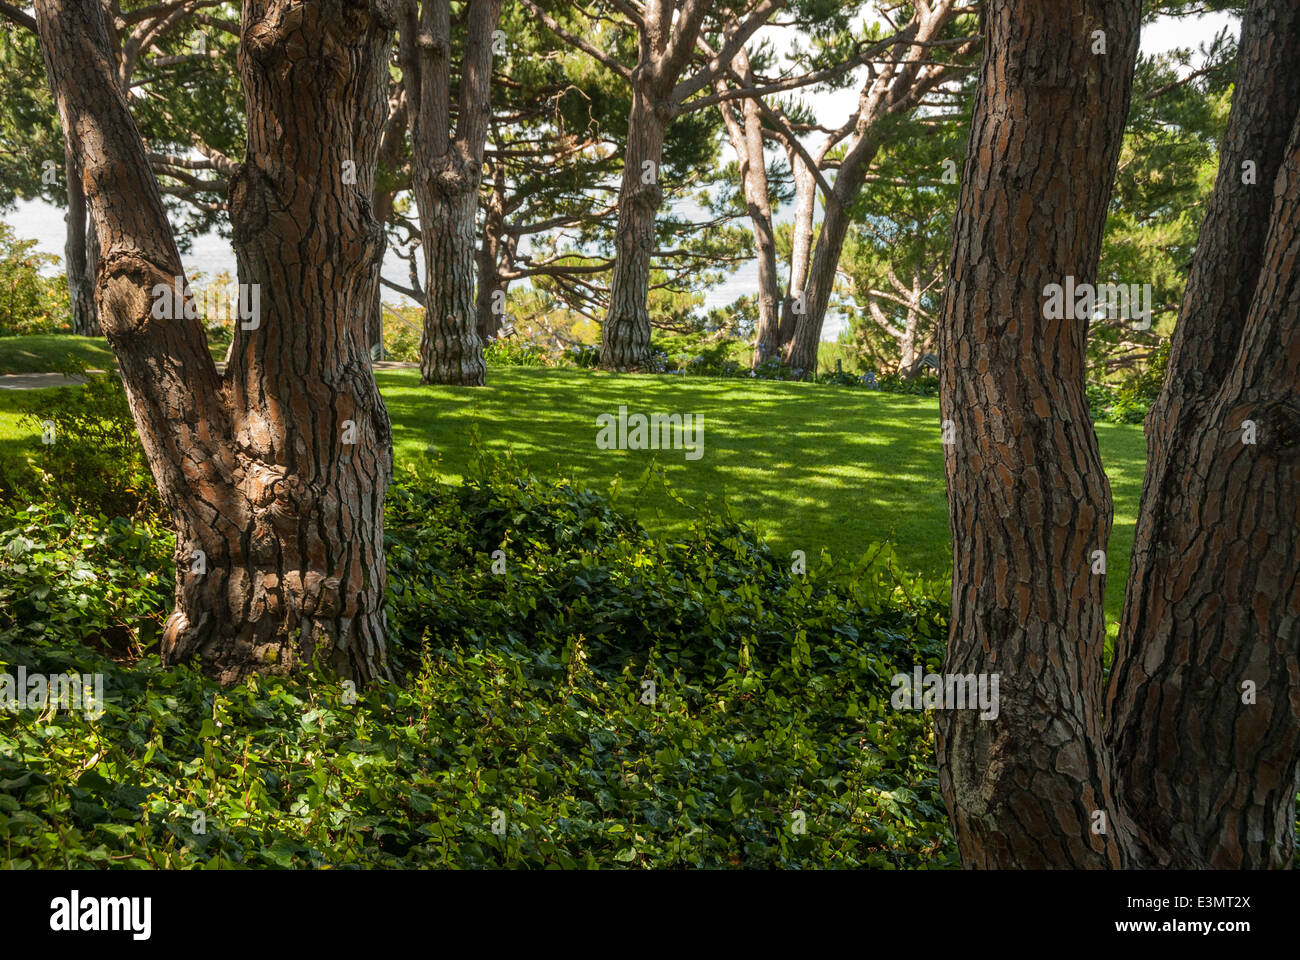 Beautiful garden lawn surrounding Wayfarers Chapel at Palos Verdes overlooking the Pacific Ocean near Los Angeles, California. Stock Photo